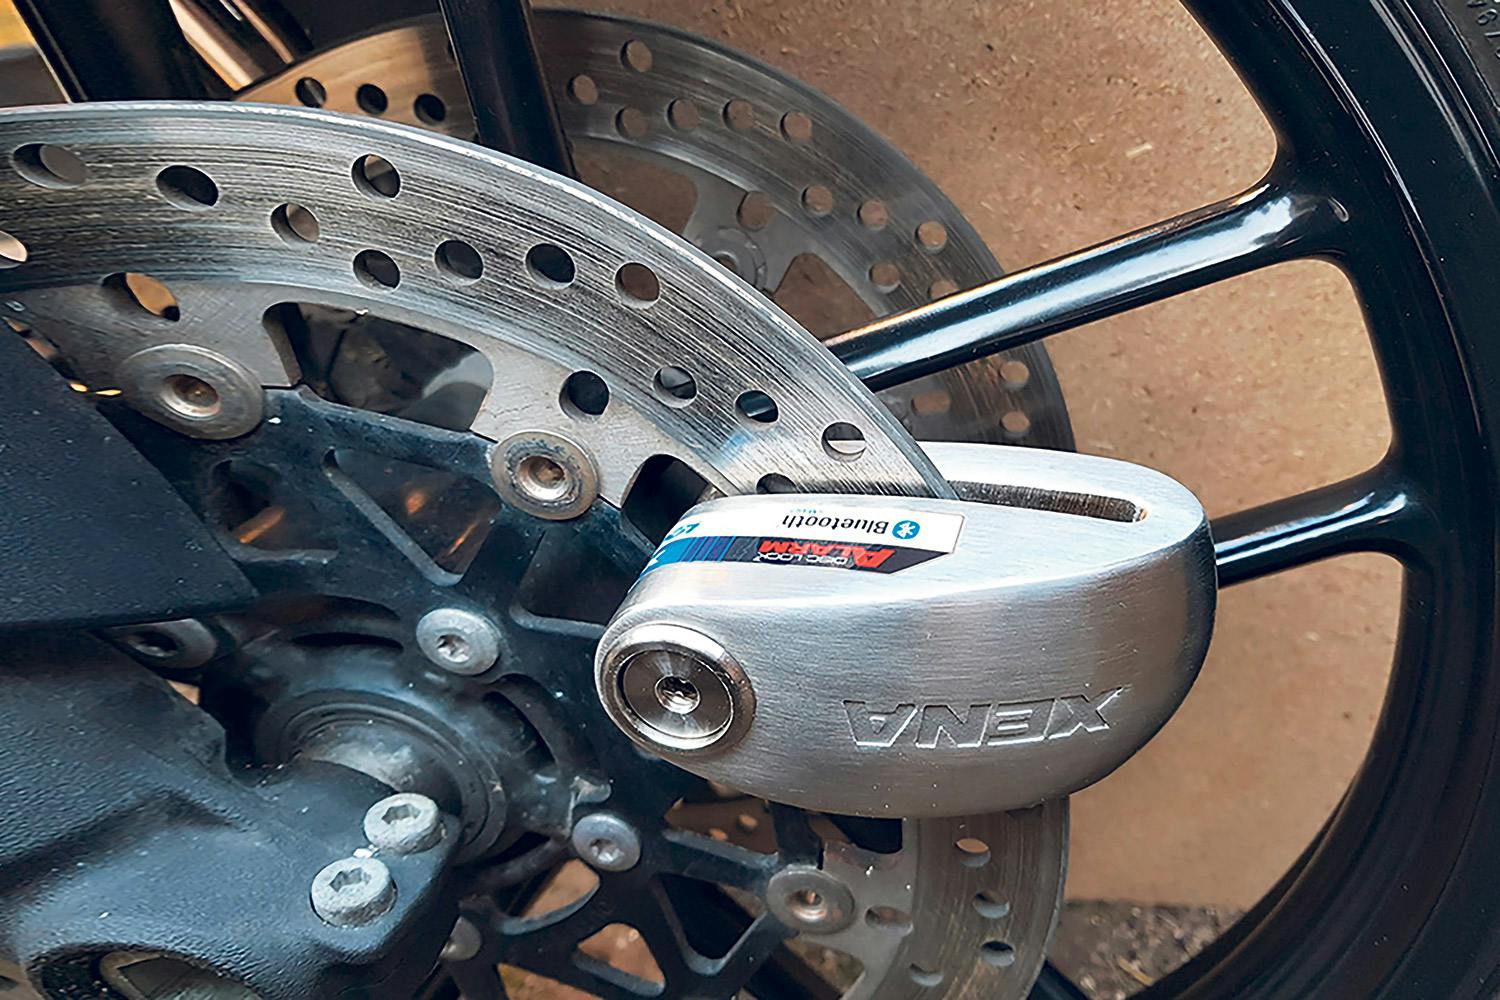 perfk Heavy Duty Motorbike Wheel Disc Brake Lock Security Safety Alarm+2 Keys for Yamaha 